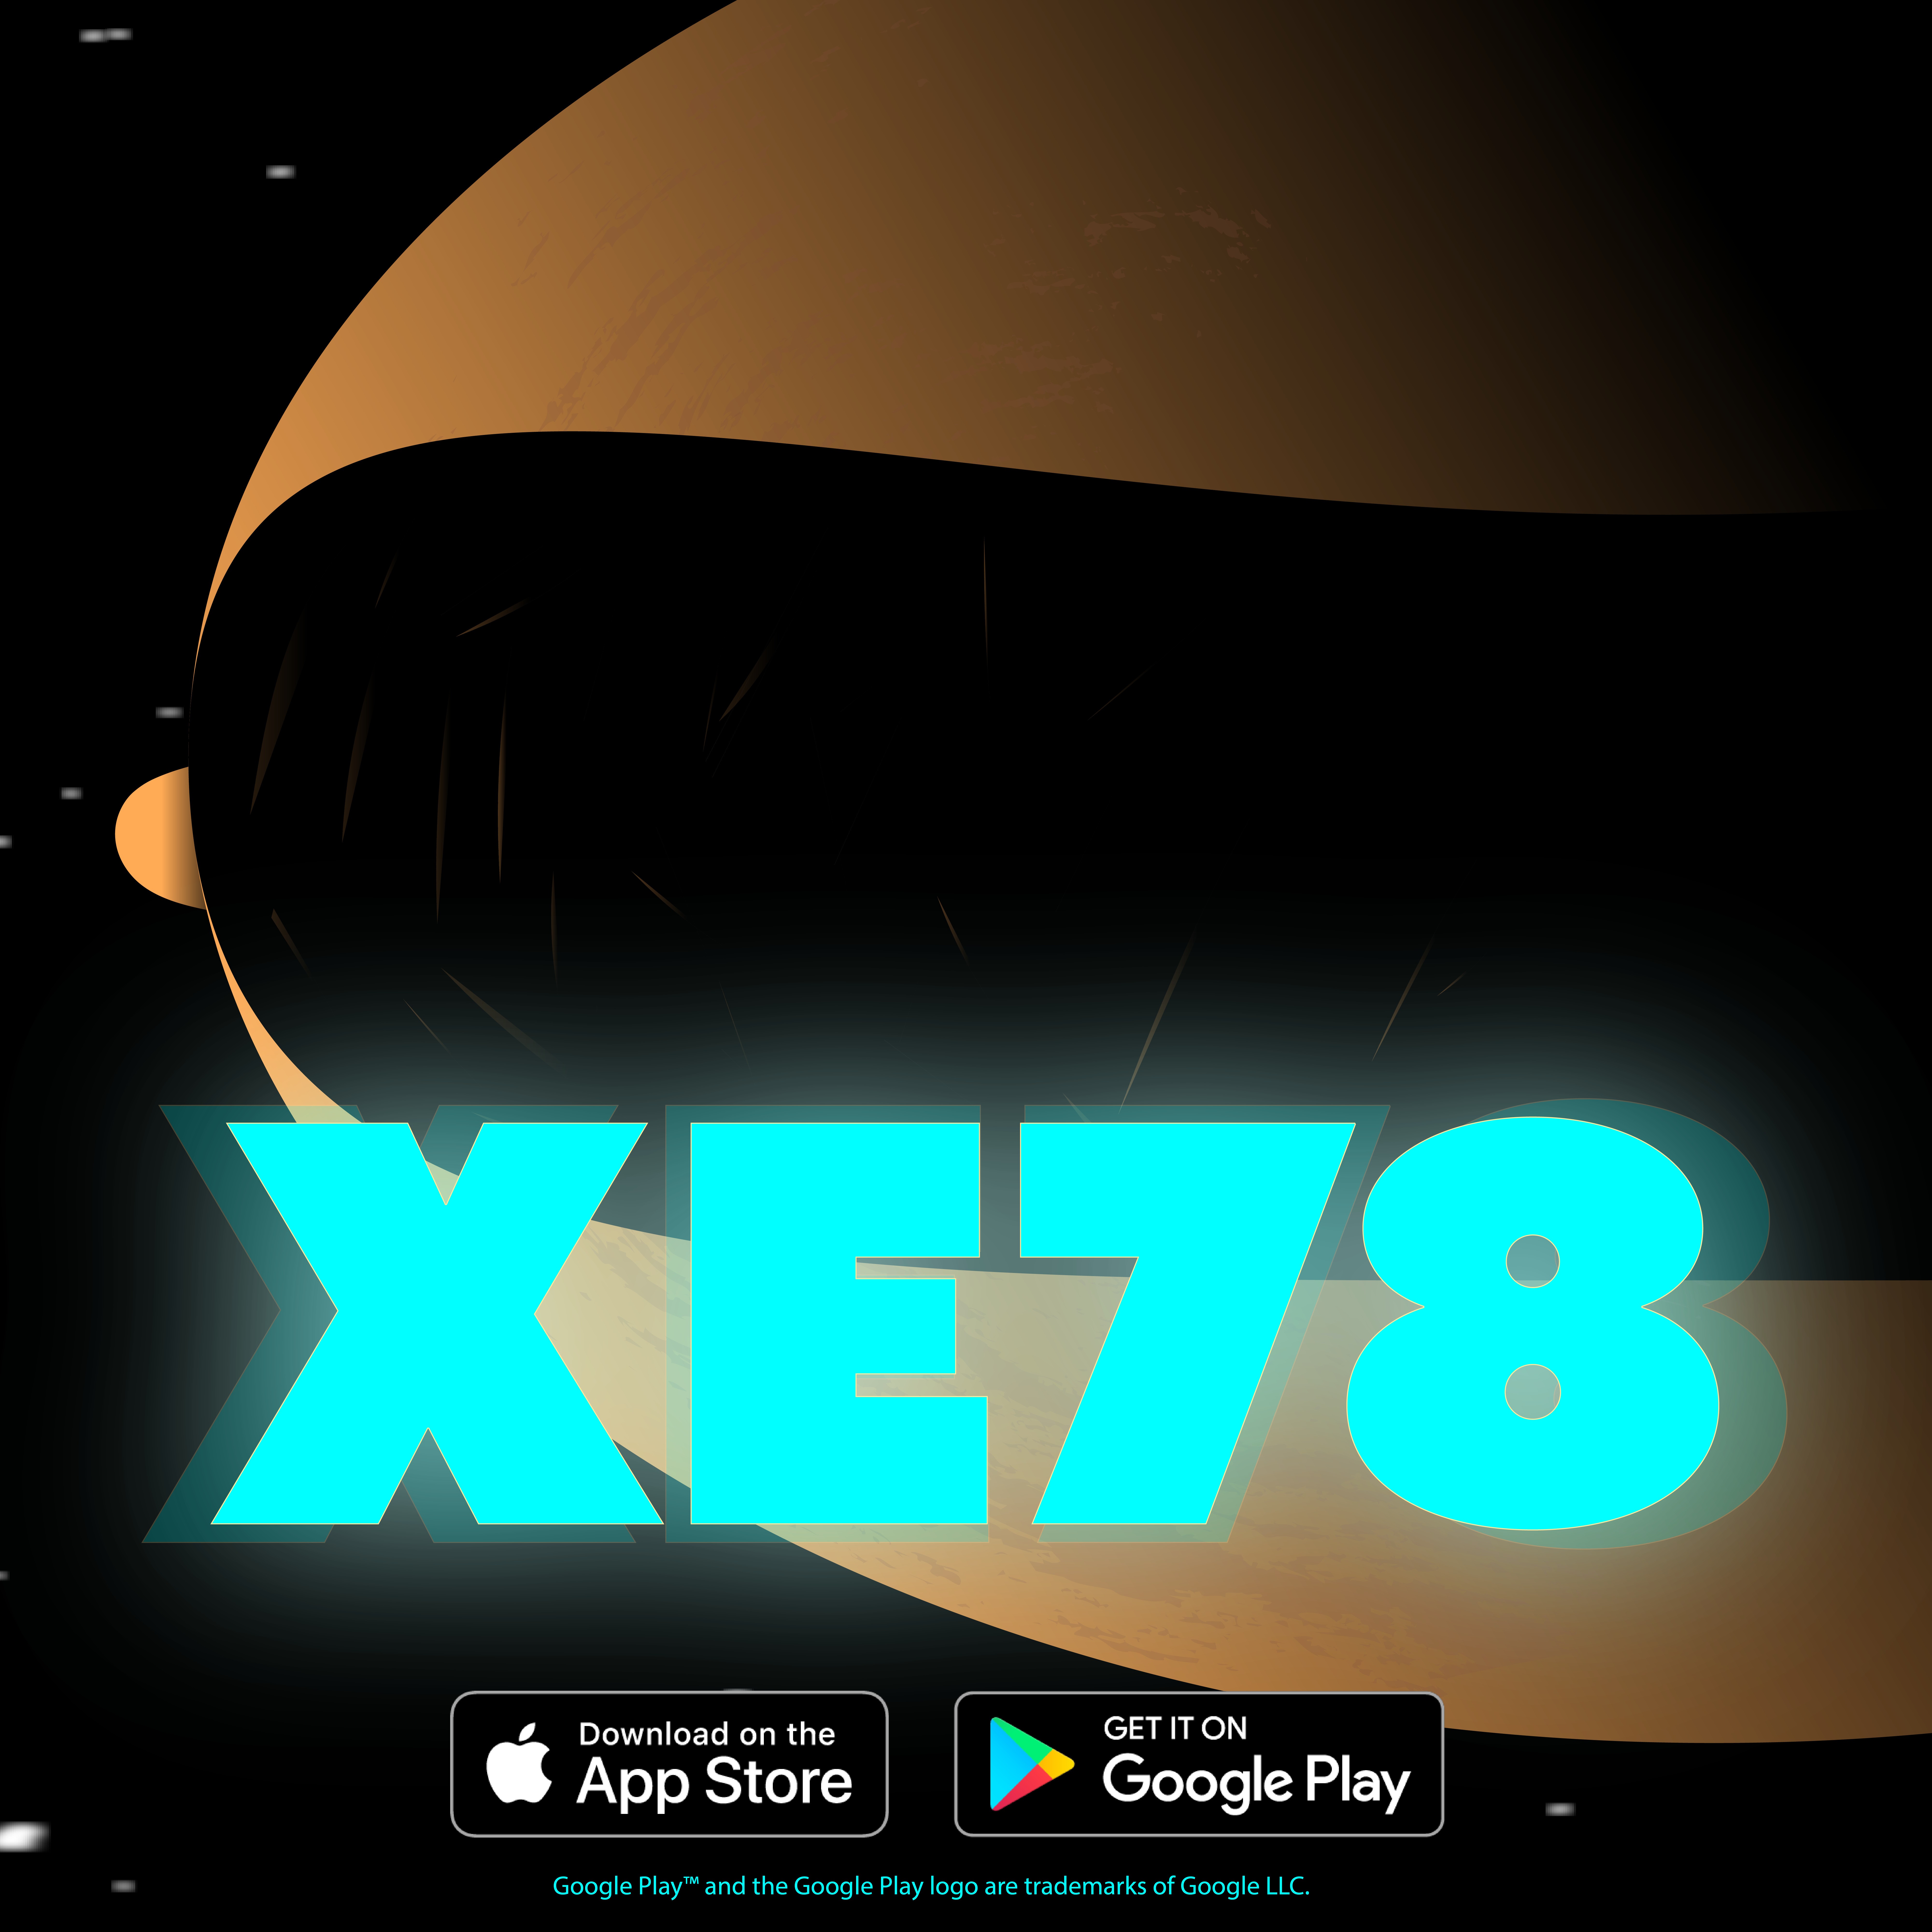 XE78 Square Logo